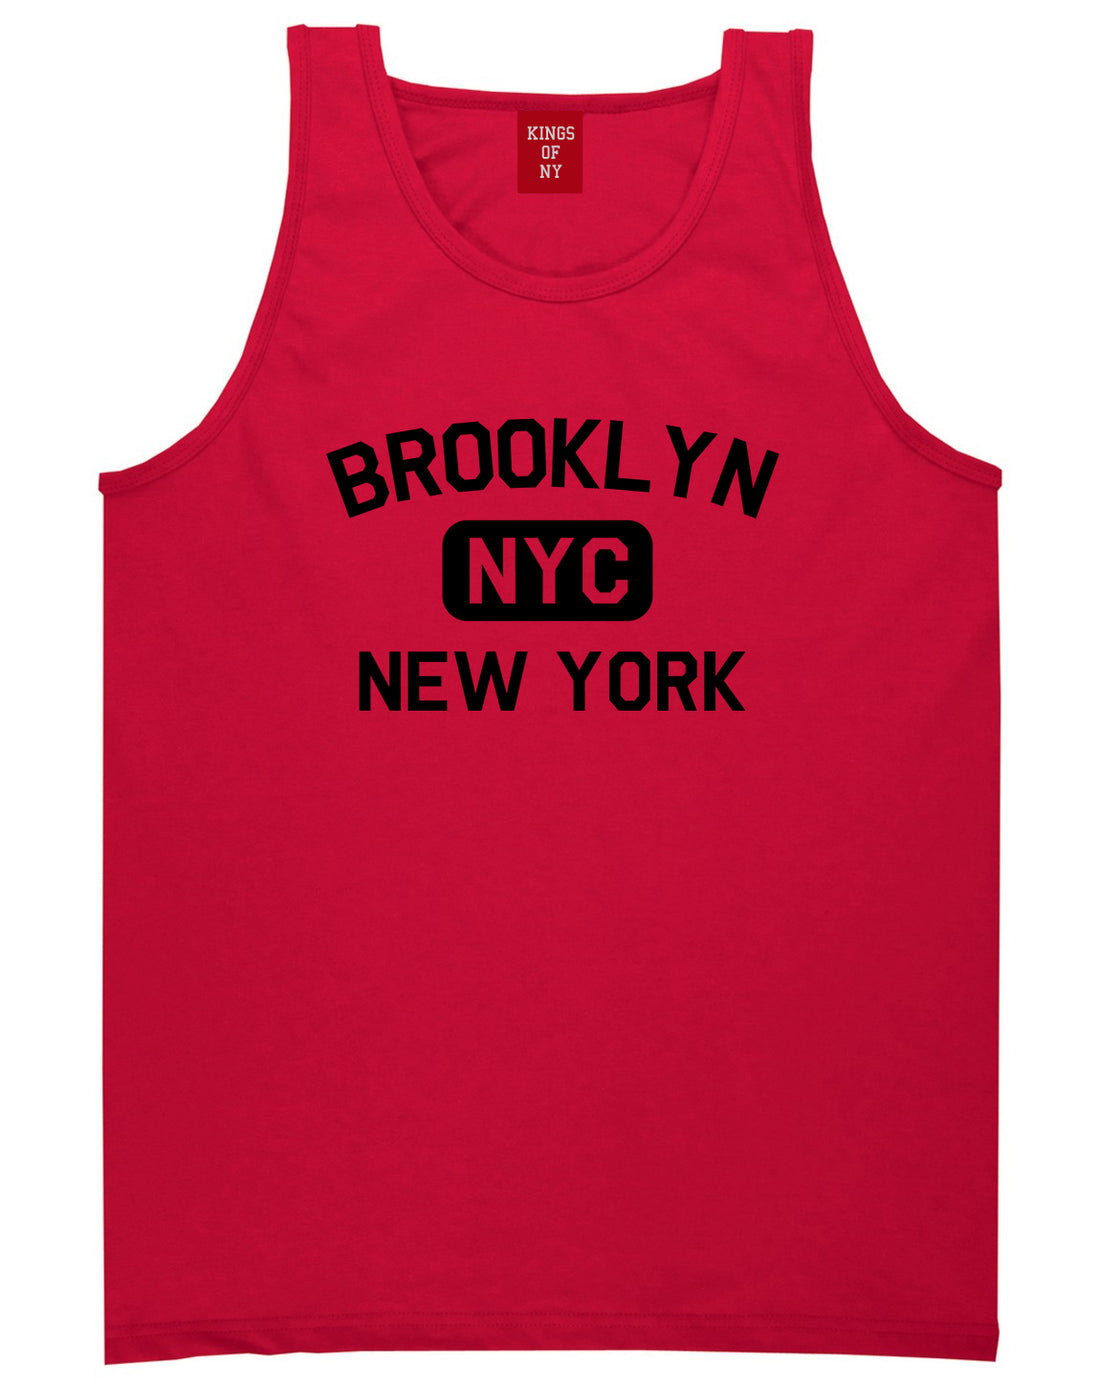 Brooklyn Gym NYC New York Mens Tank Top T-Shirt Red